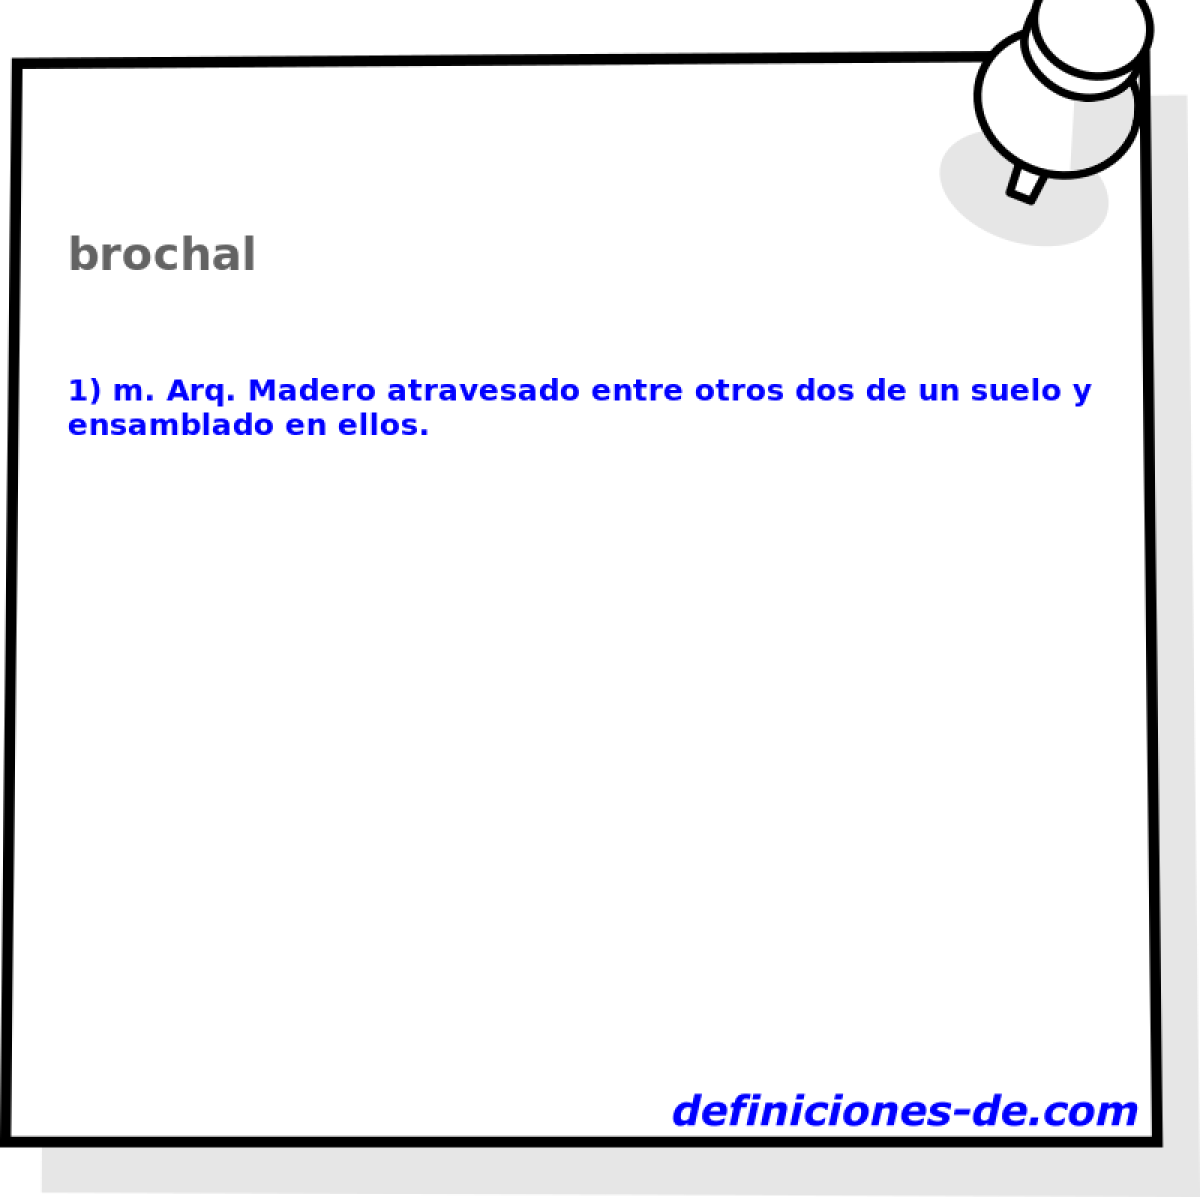 brochal 